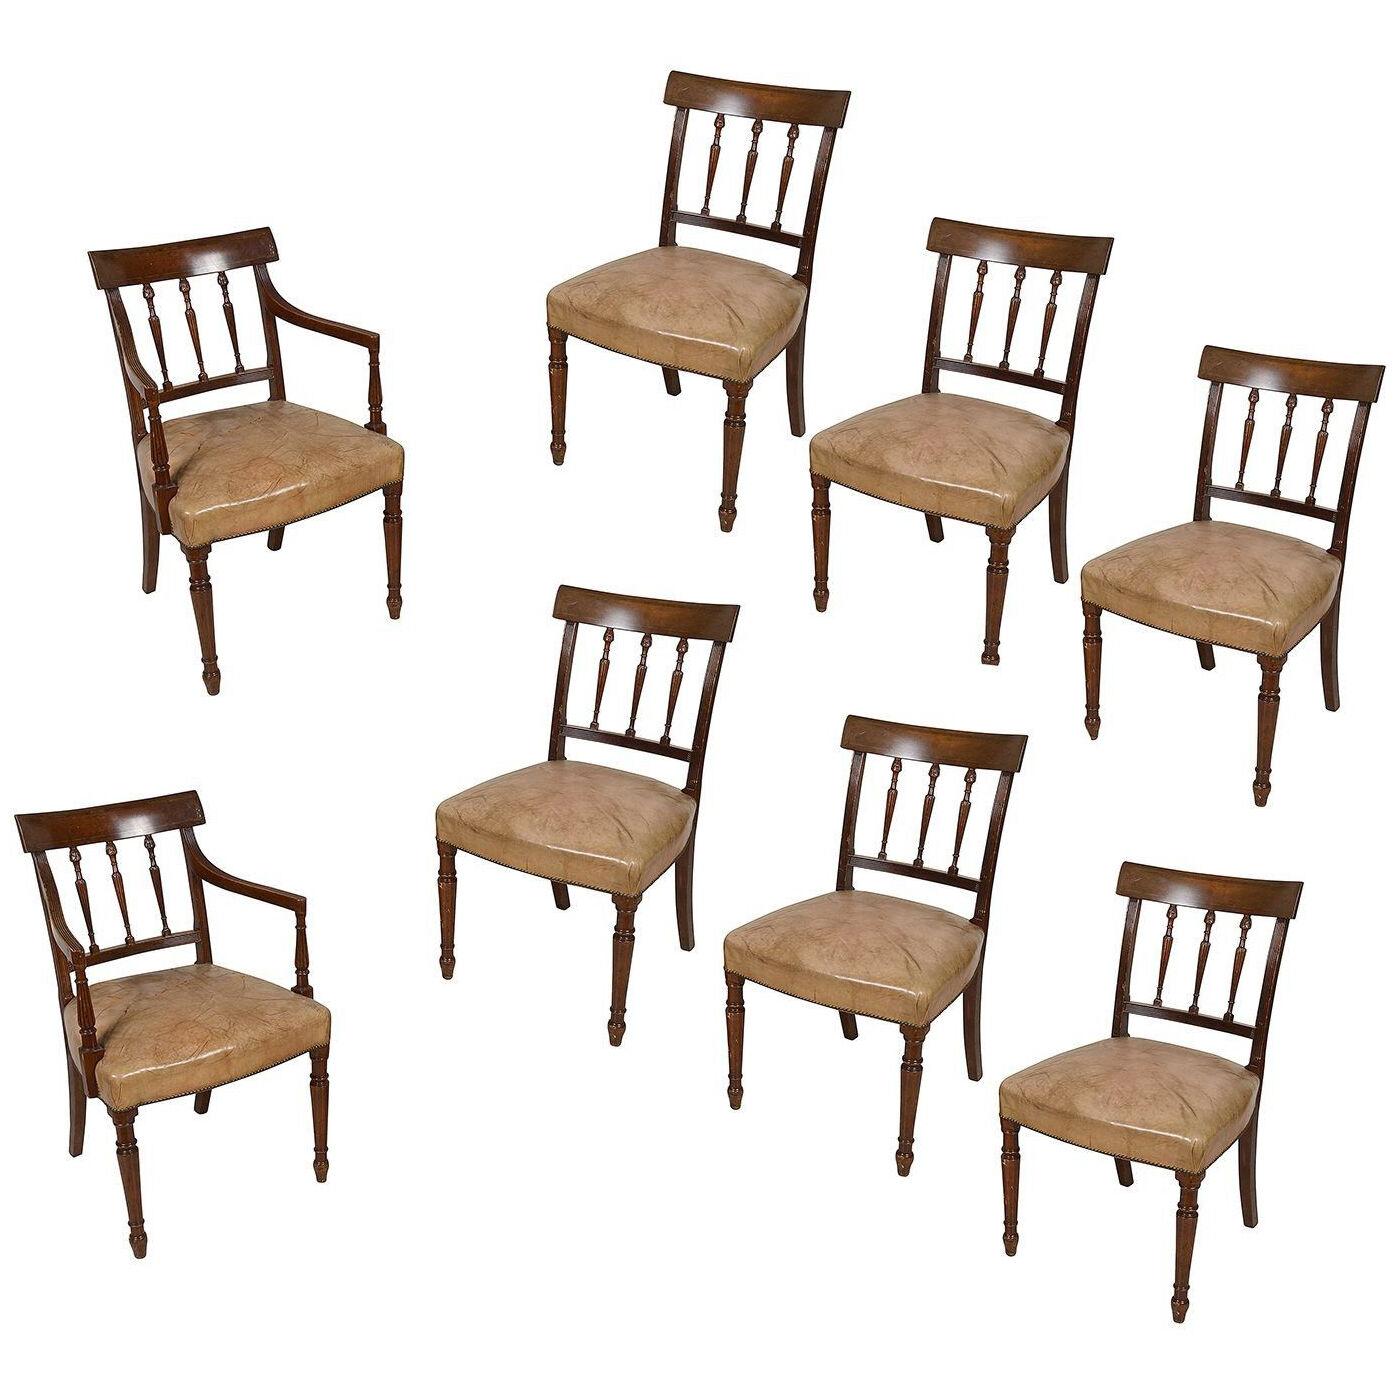 8 Sheraton style Mahogany ding chairs, circa 1900